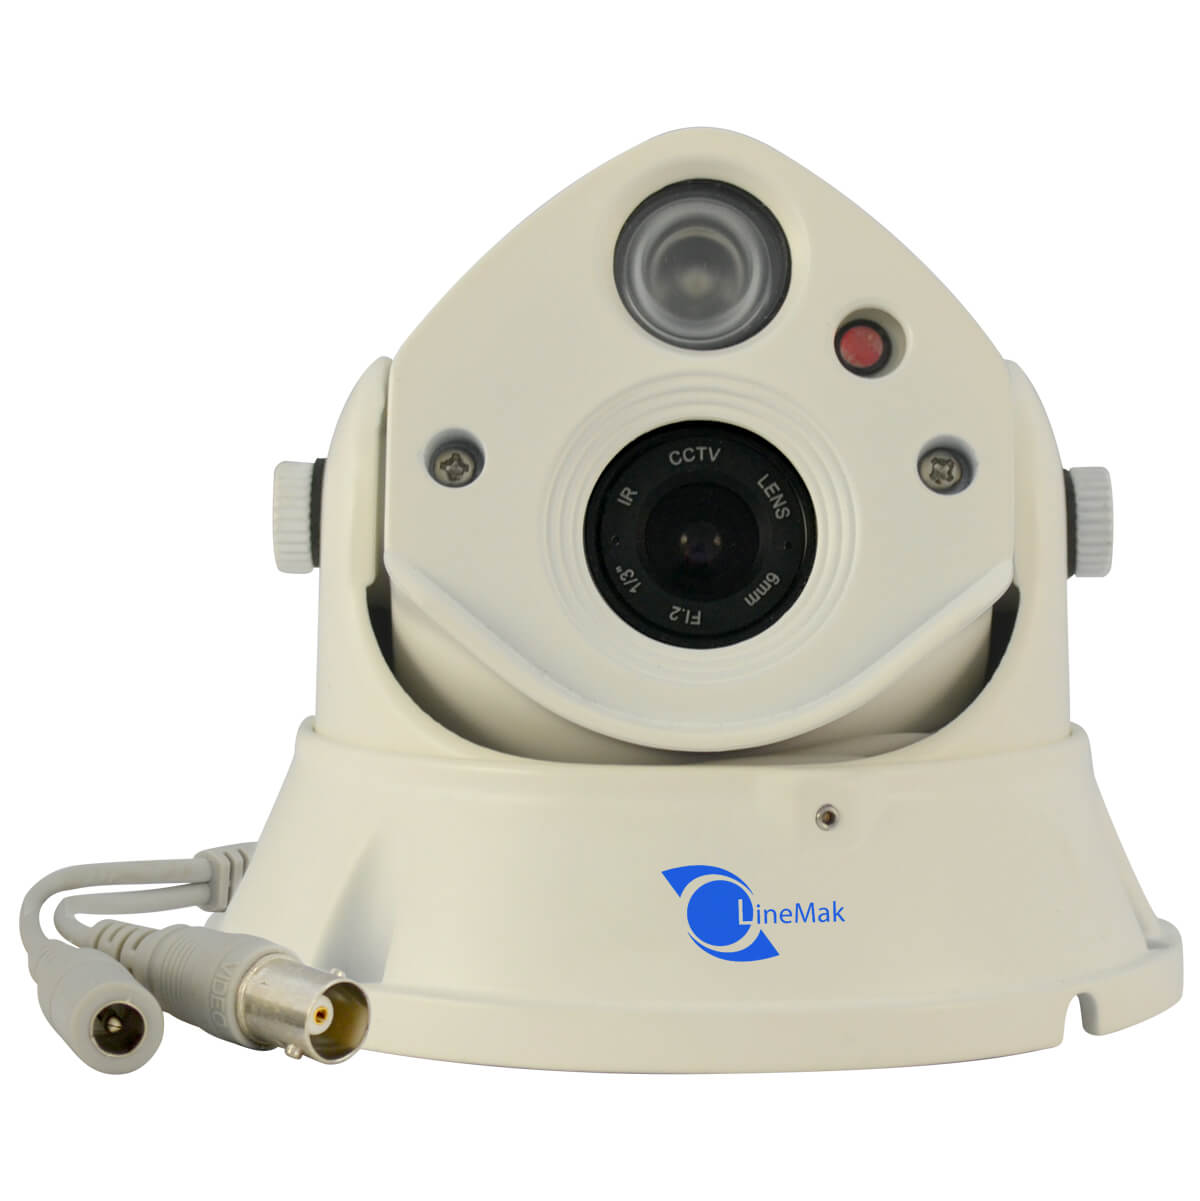 Camara tipo domo, Sensor Sony CCD 1/3, 700TVL, 1 LED Array, 30m IR